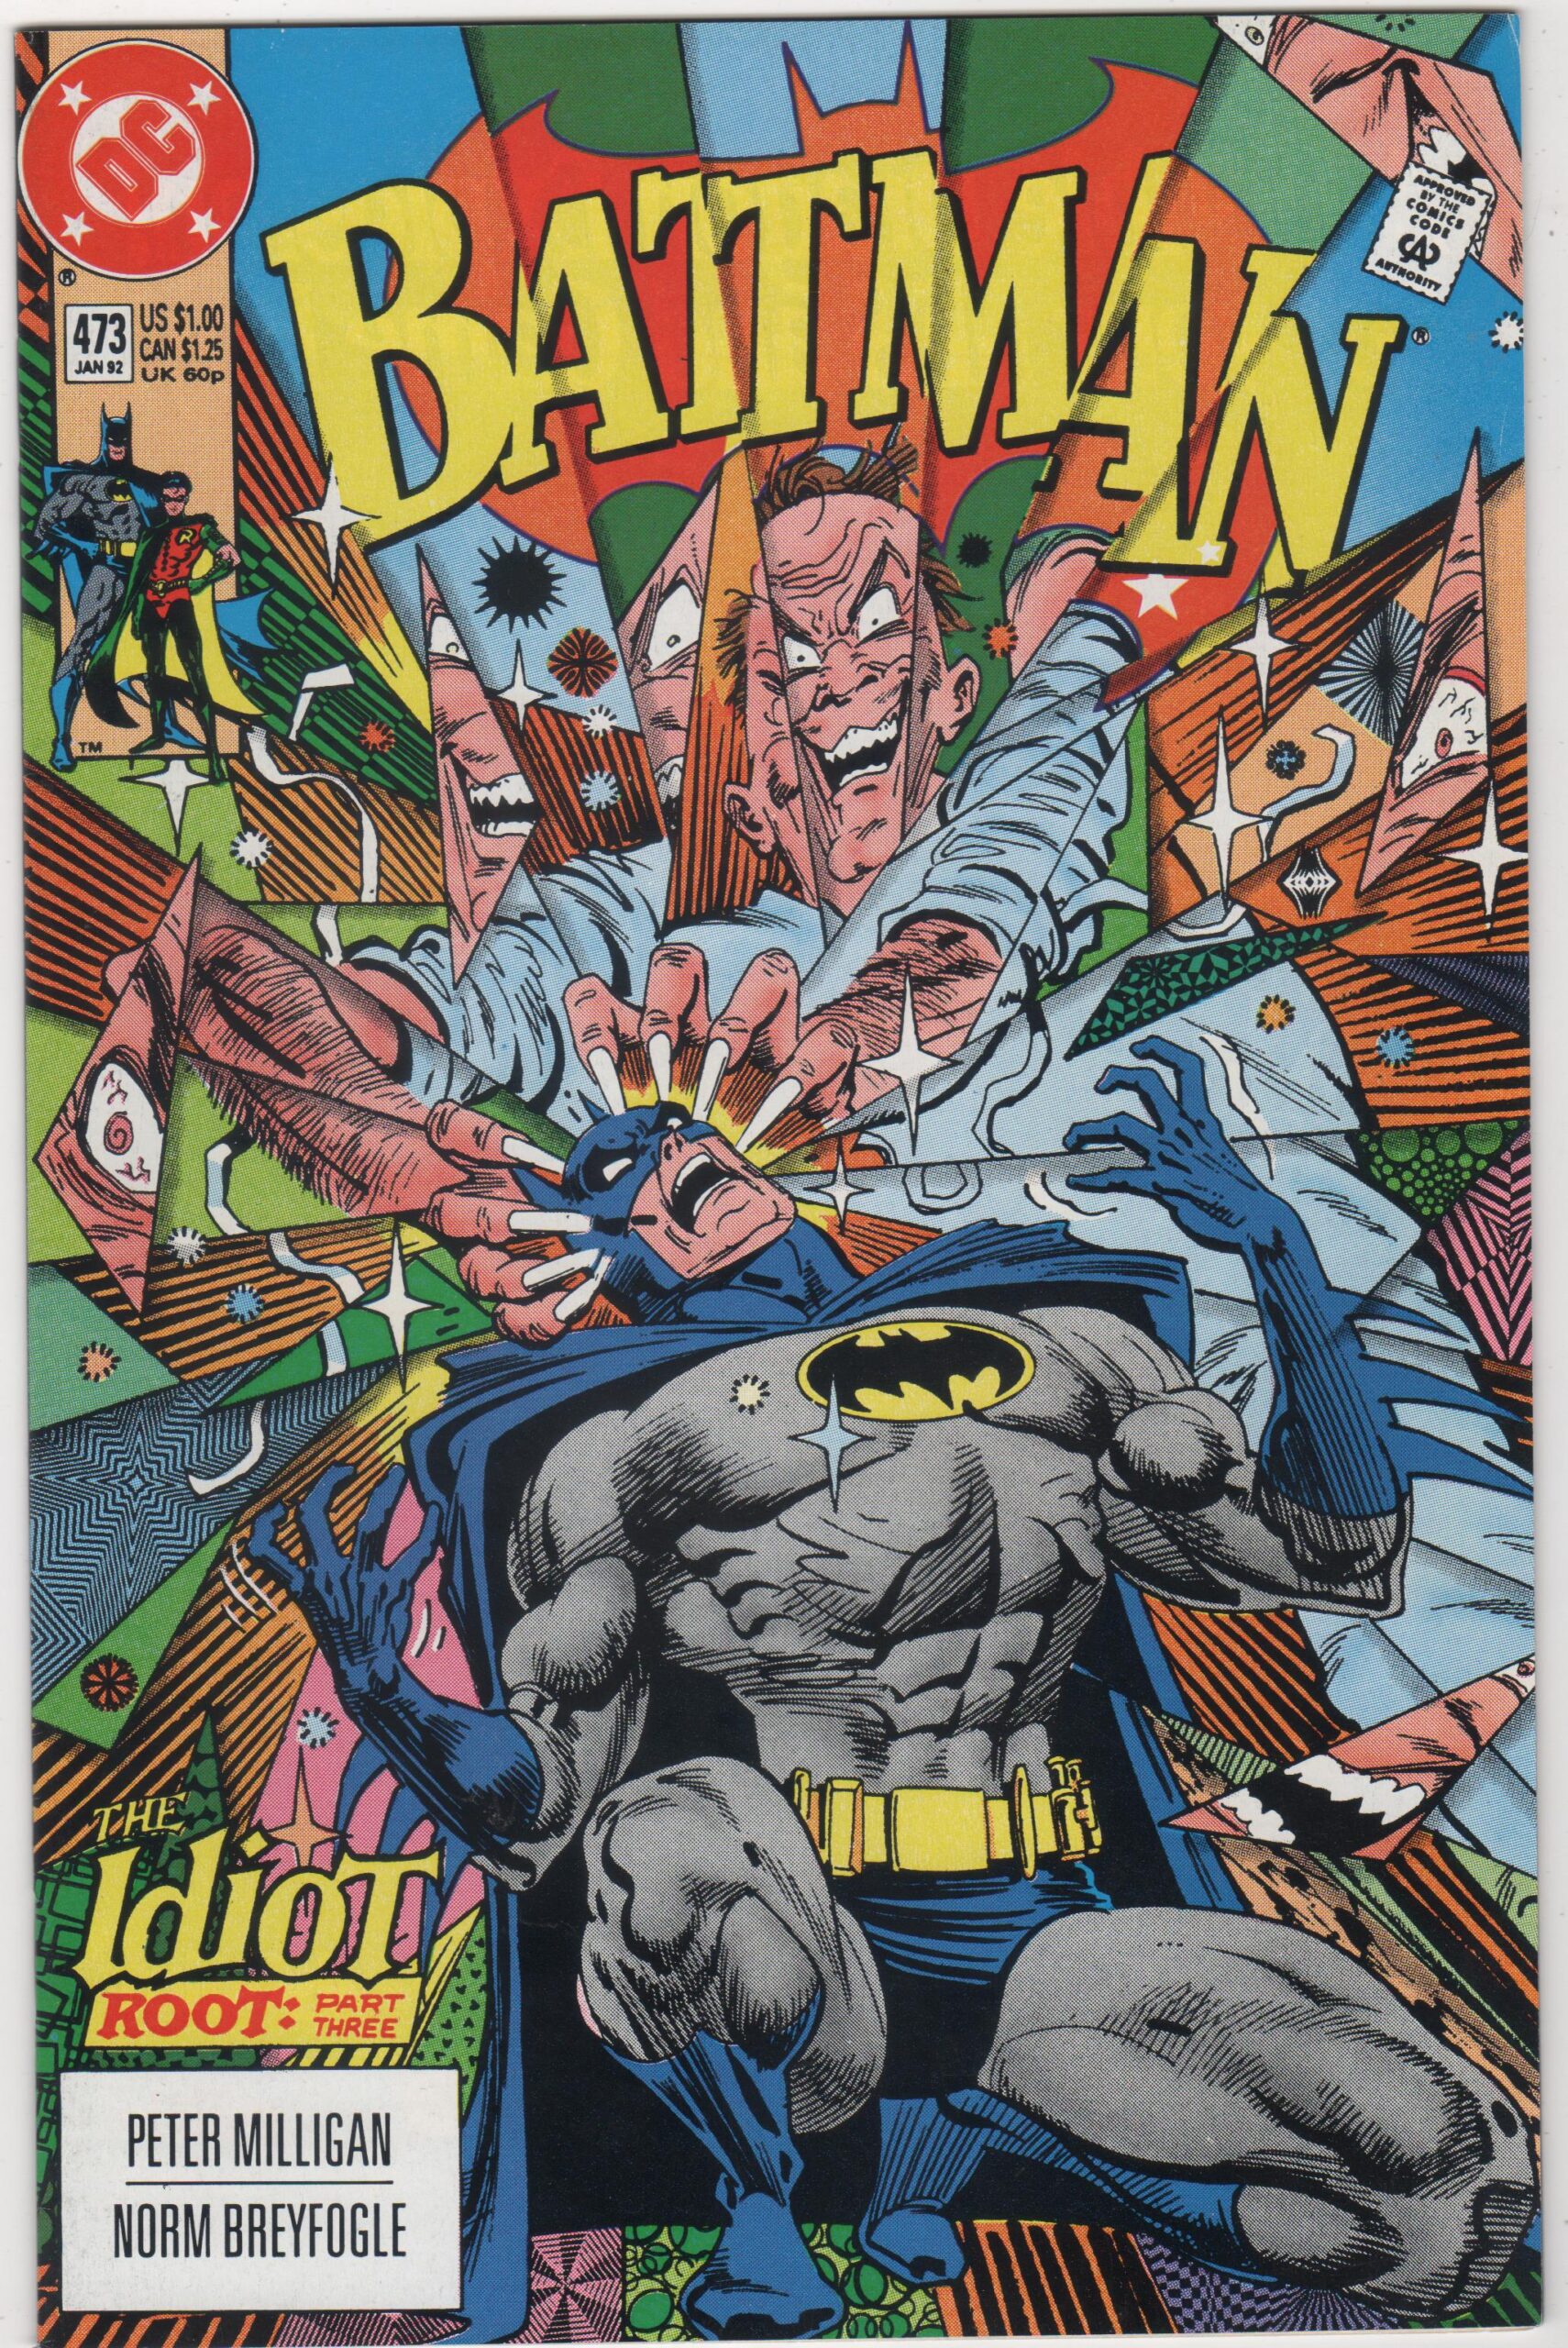 BATMAN #473 1992 First Print DC Comics